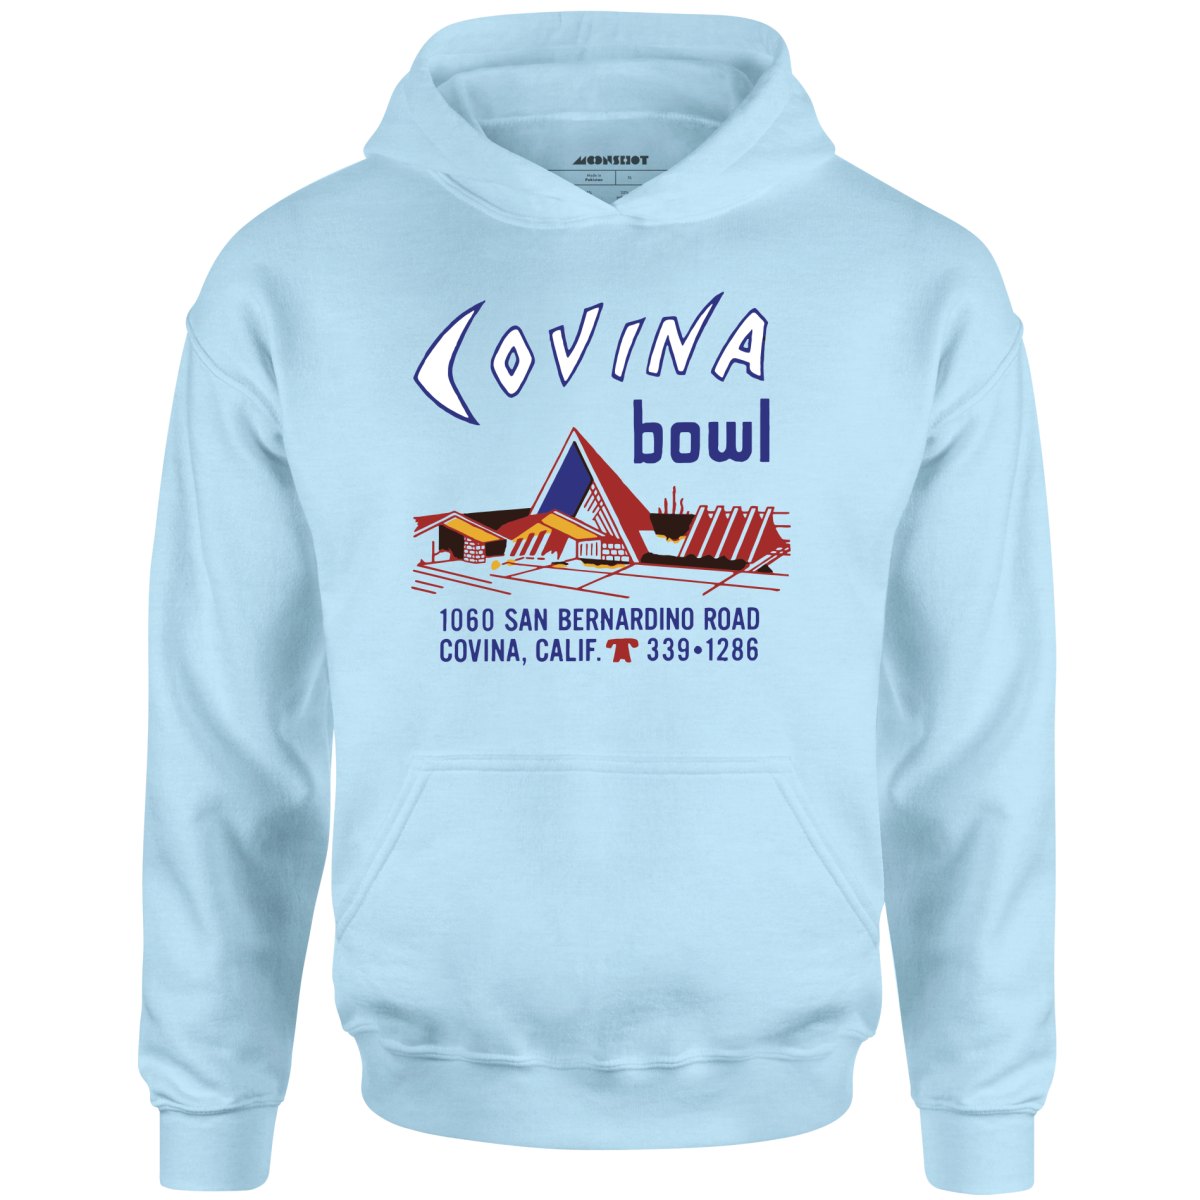 Covina Bowl - Covina, CA - Vintage Bowling Alley - Unisex Hoodie